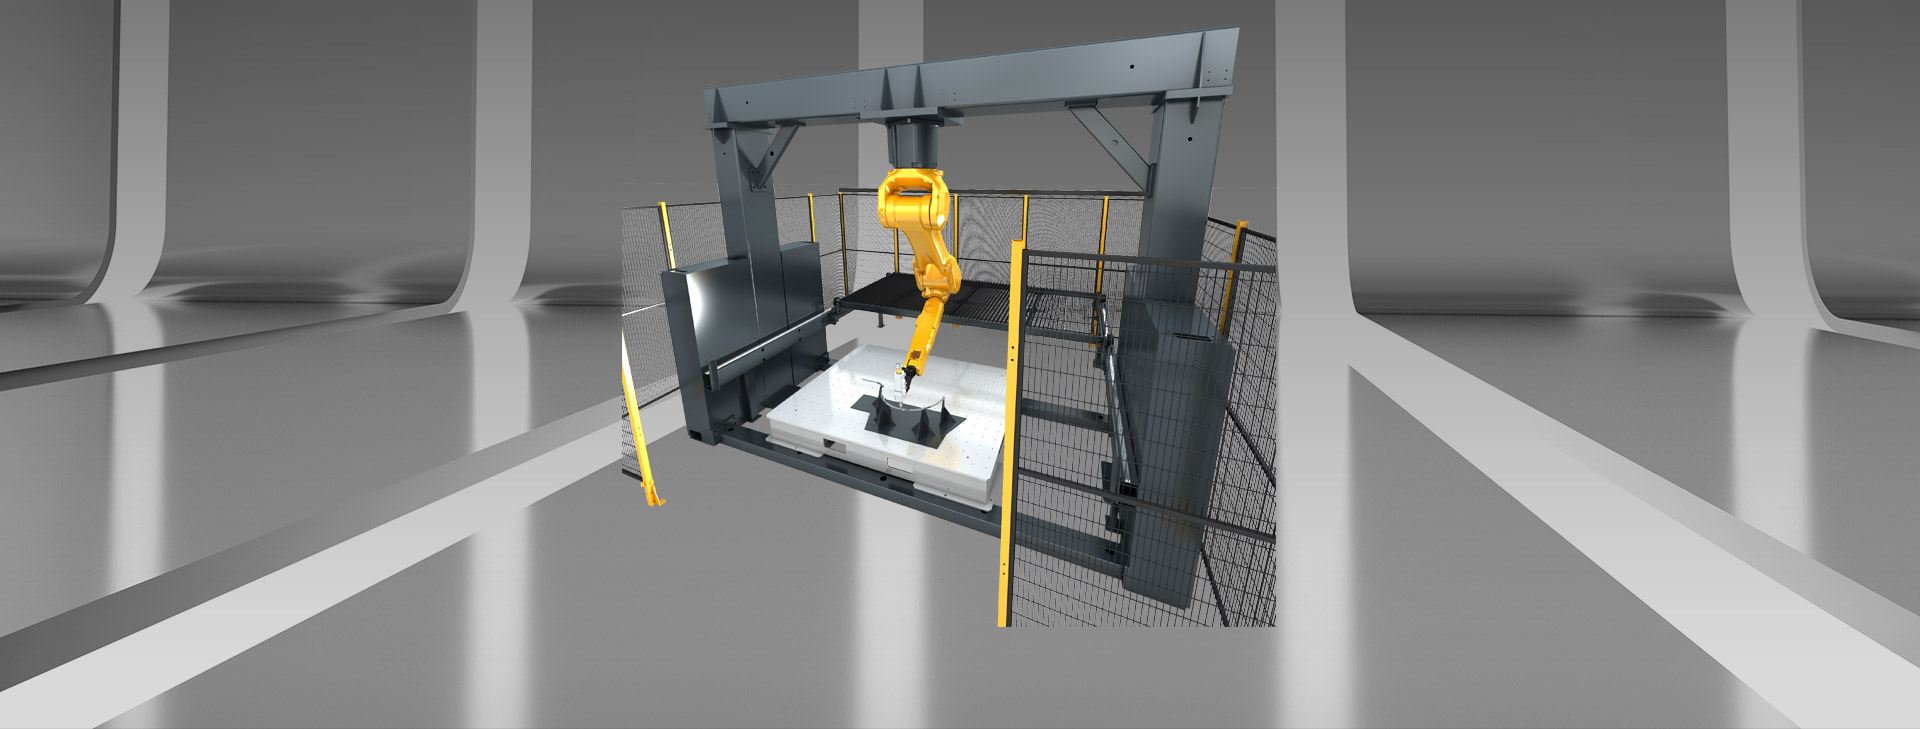 Máquina de corte por láser de Robot 3D con estructura de pórtico